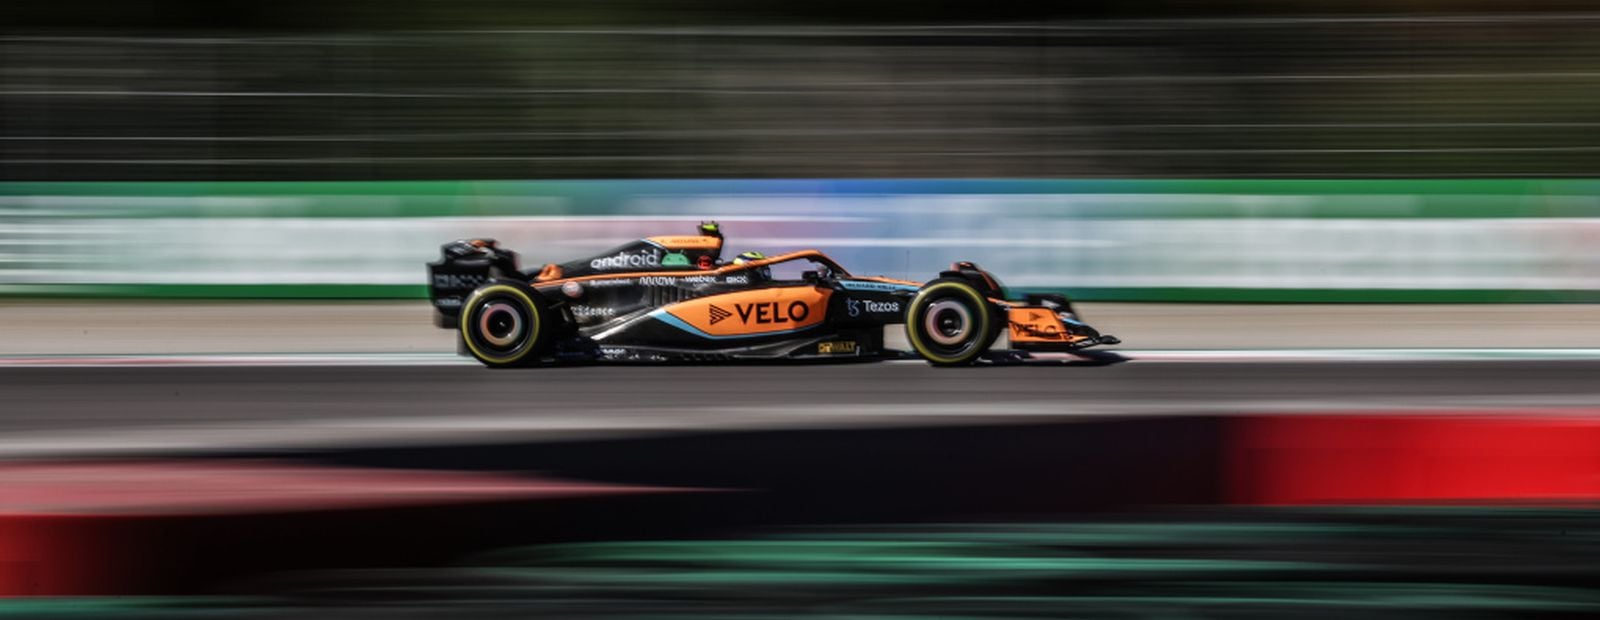 McLaren Racing Formula 1 calendar confirmed